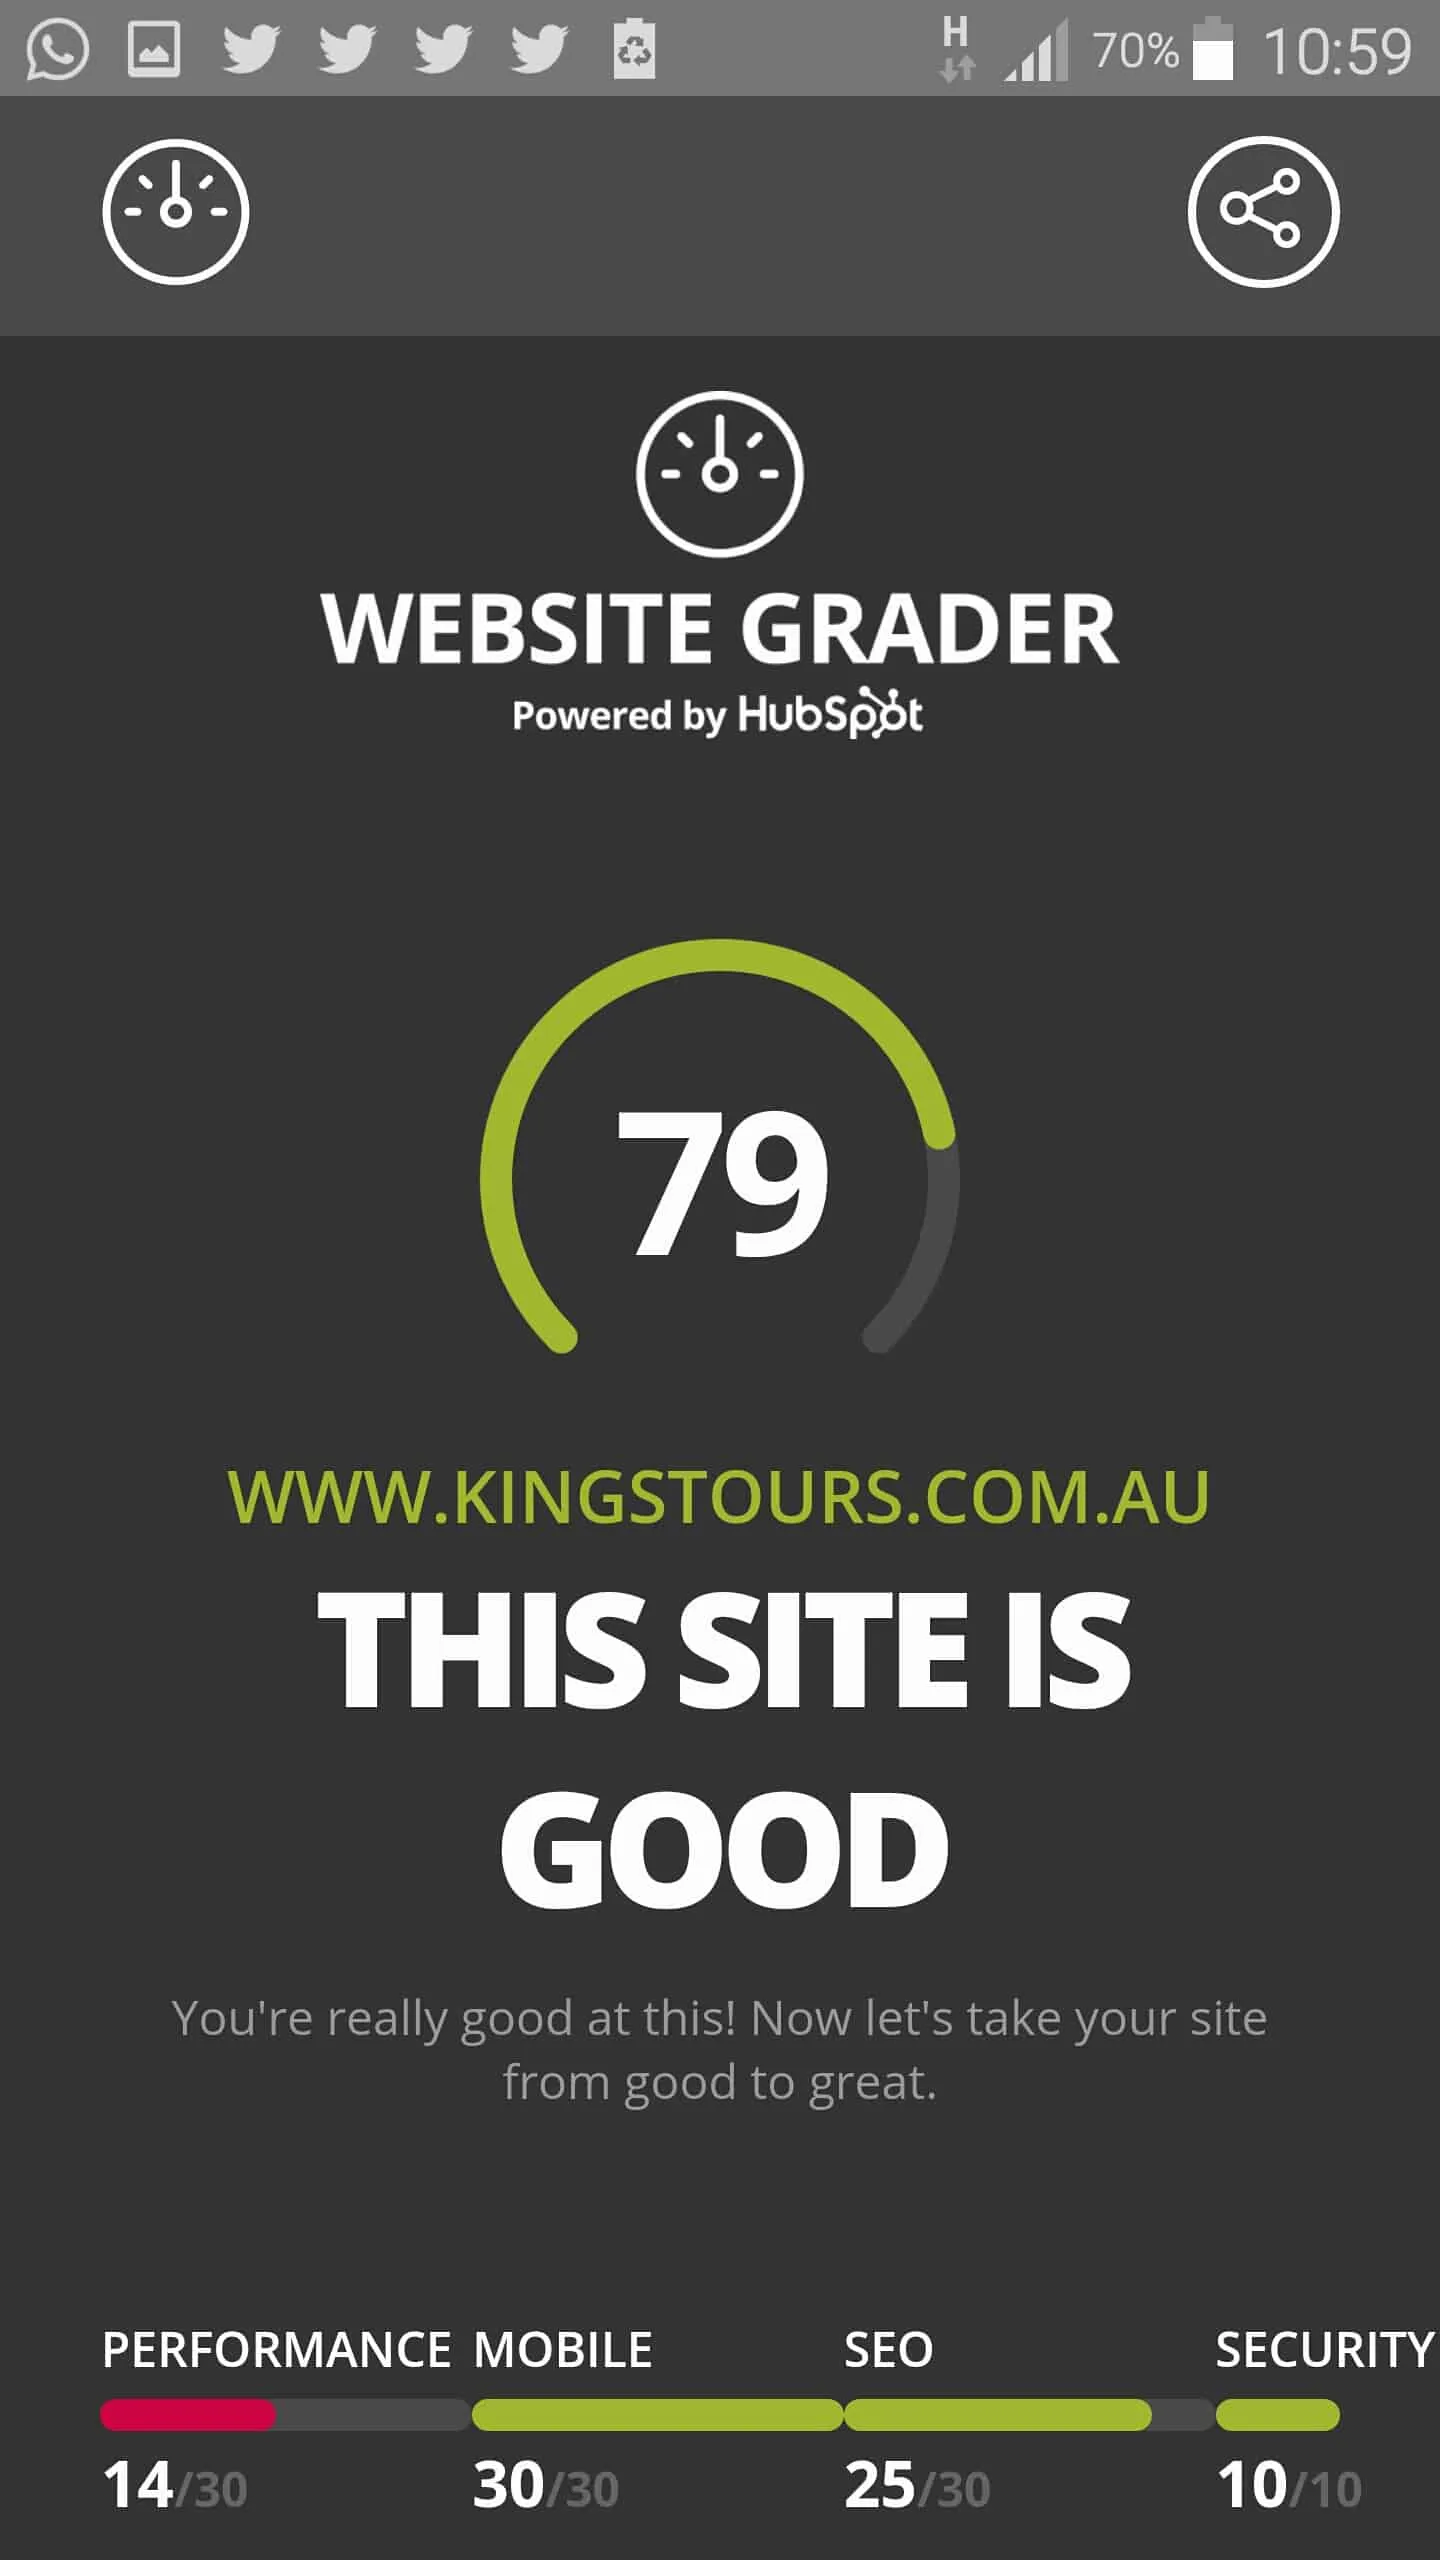 hubspot website grader clarence ling testing 307 marketing website the  king tours